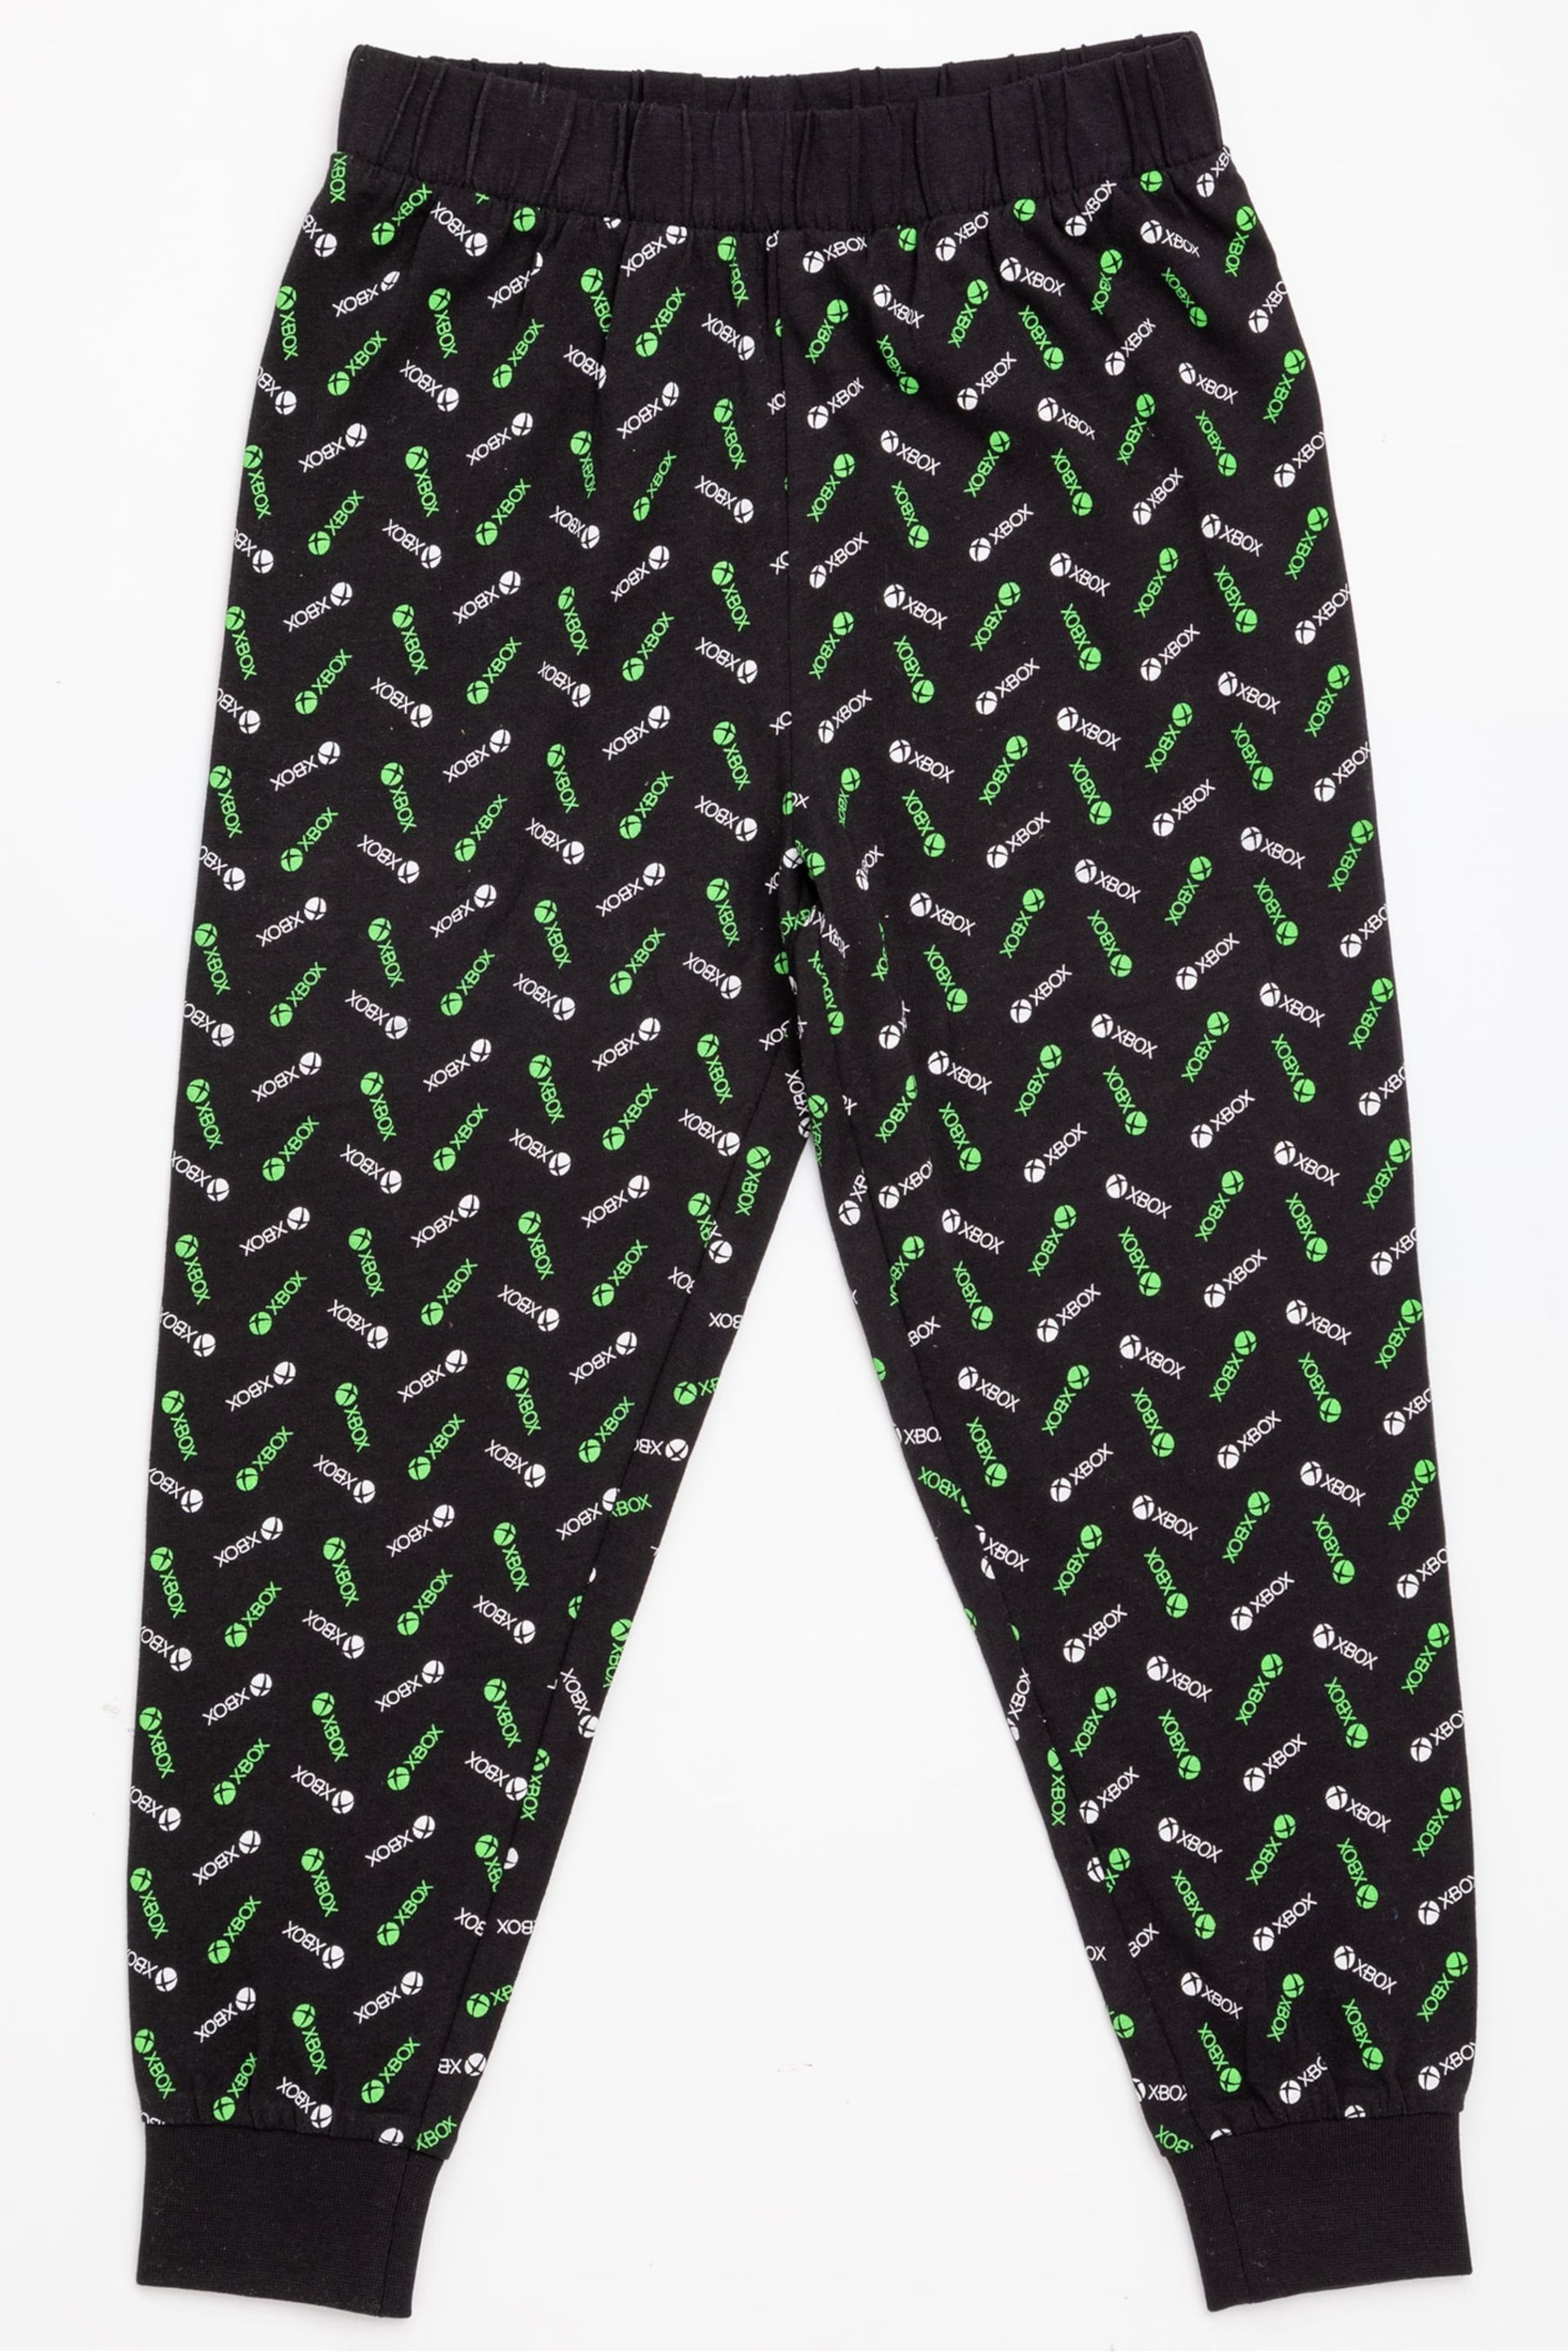 Vanilla Underground Black Xbox Long Leg Kids Pyjama Set - Image 4 of 5